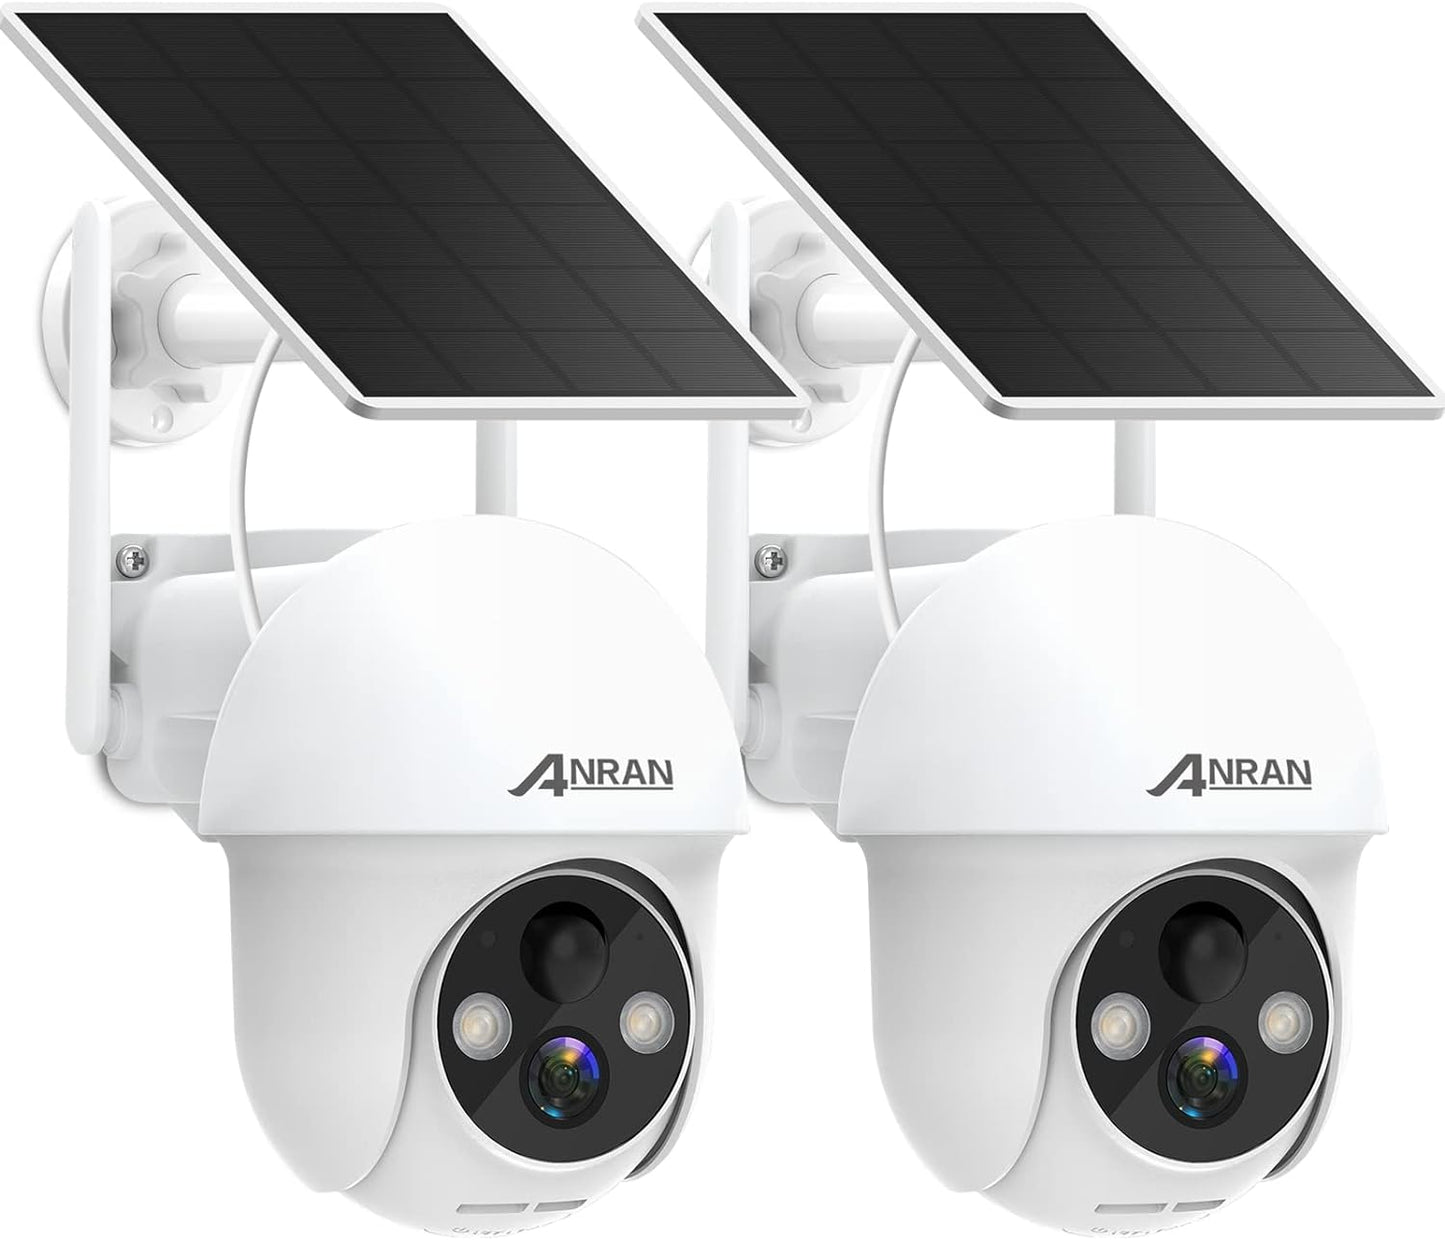 ANRAN 2K Security Camera Wireless Outdoor, Solar Outdoor Camera with 360° View, Smart Siren, Spotlights, Color Night Vision, PIR Human Detection, Pan Tilt Control, 2-Way Talk, Q01W 2 Packs